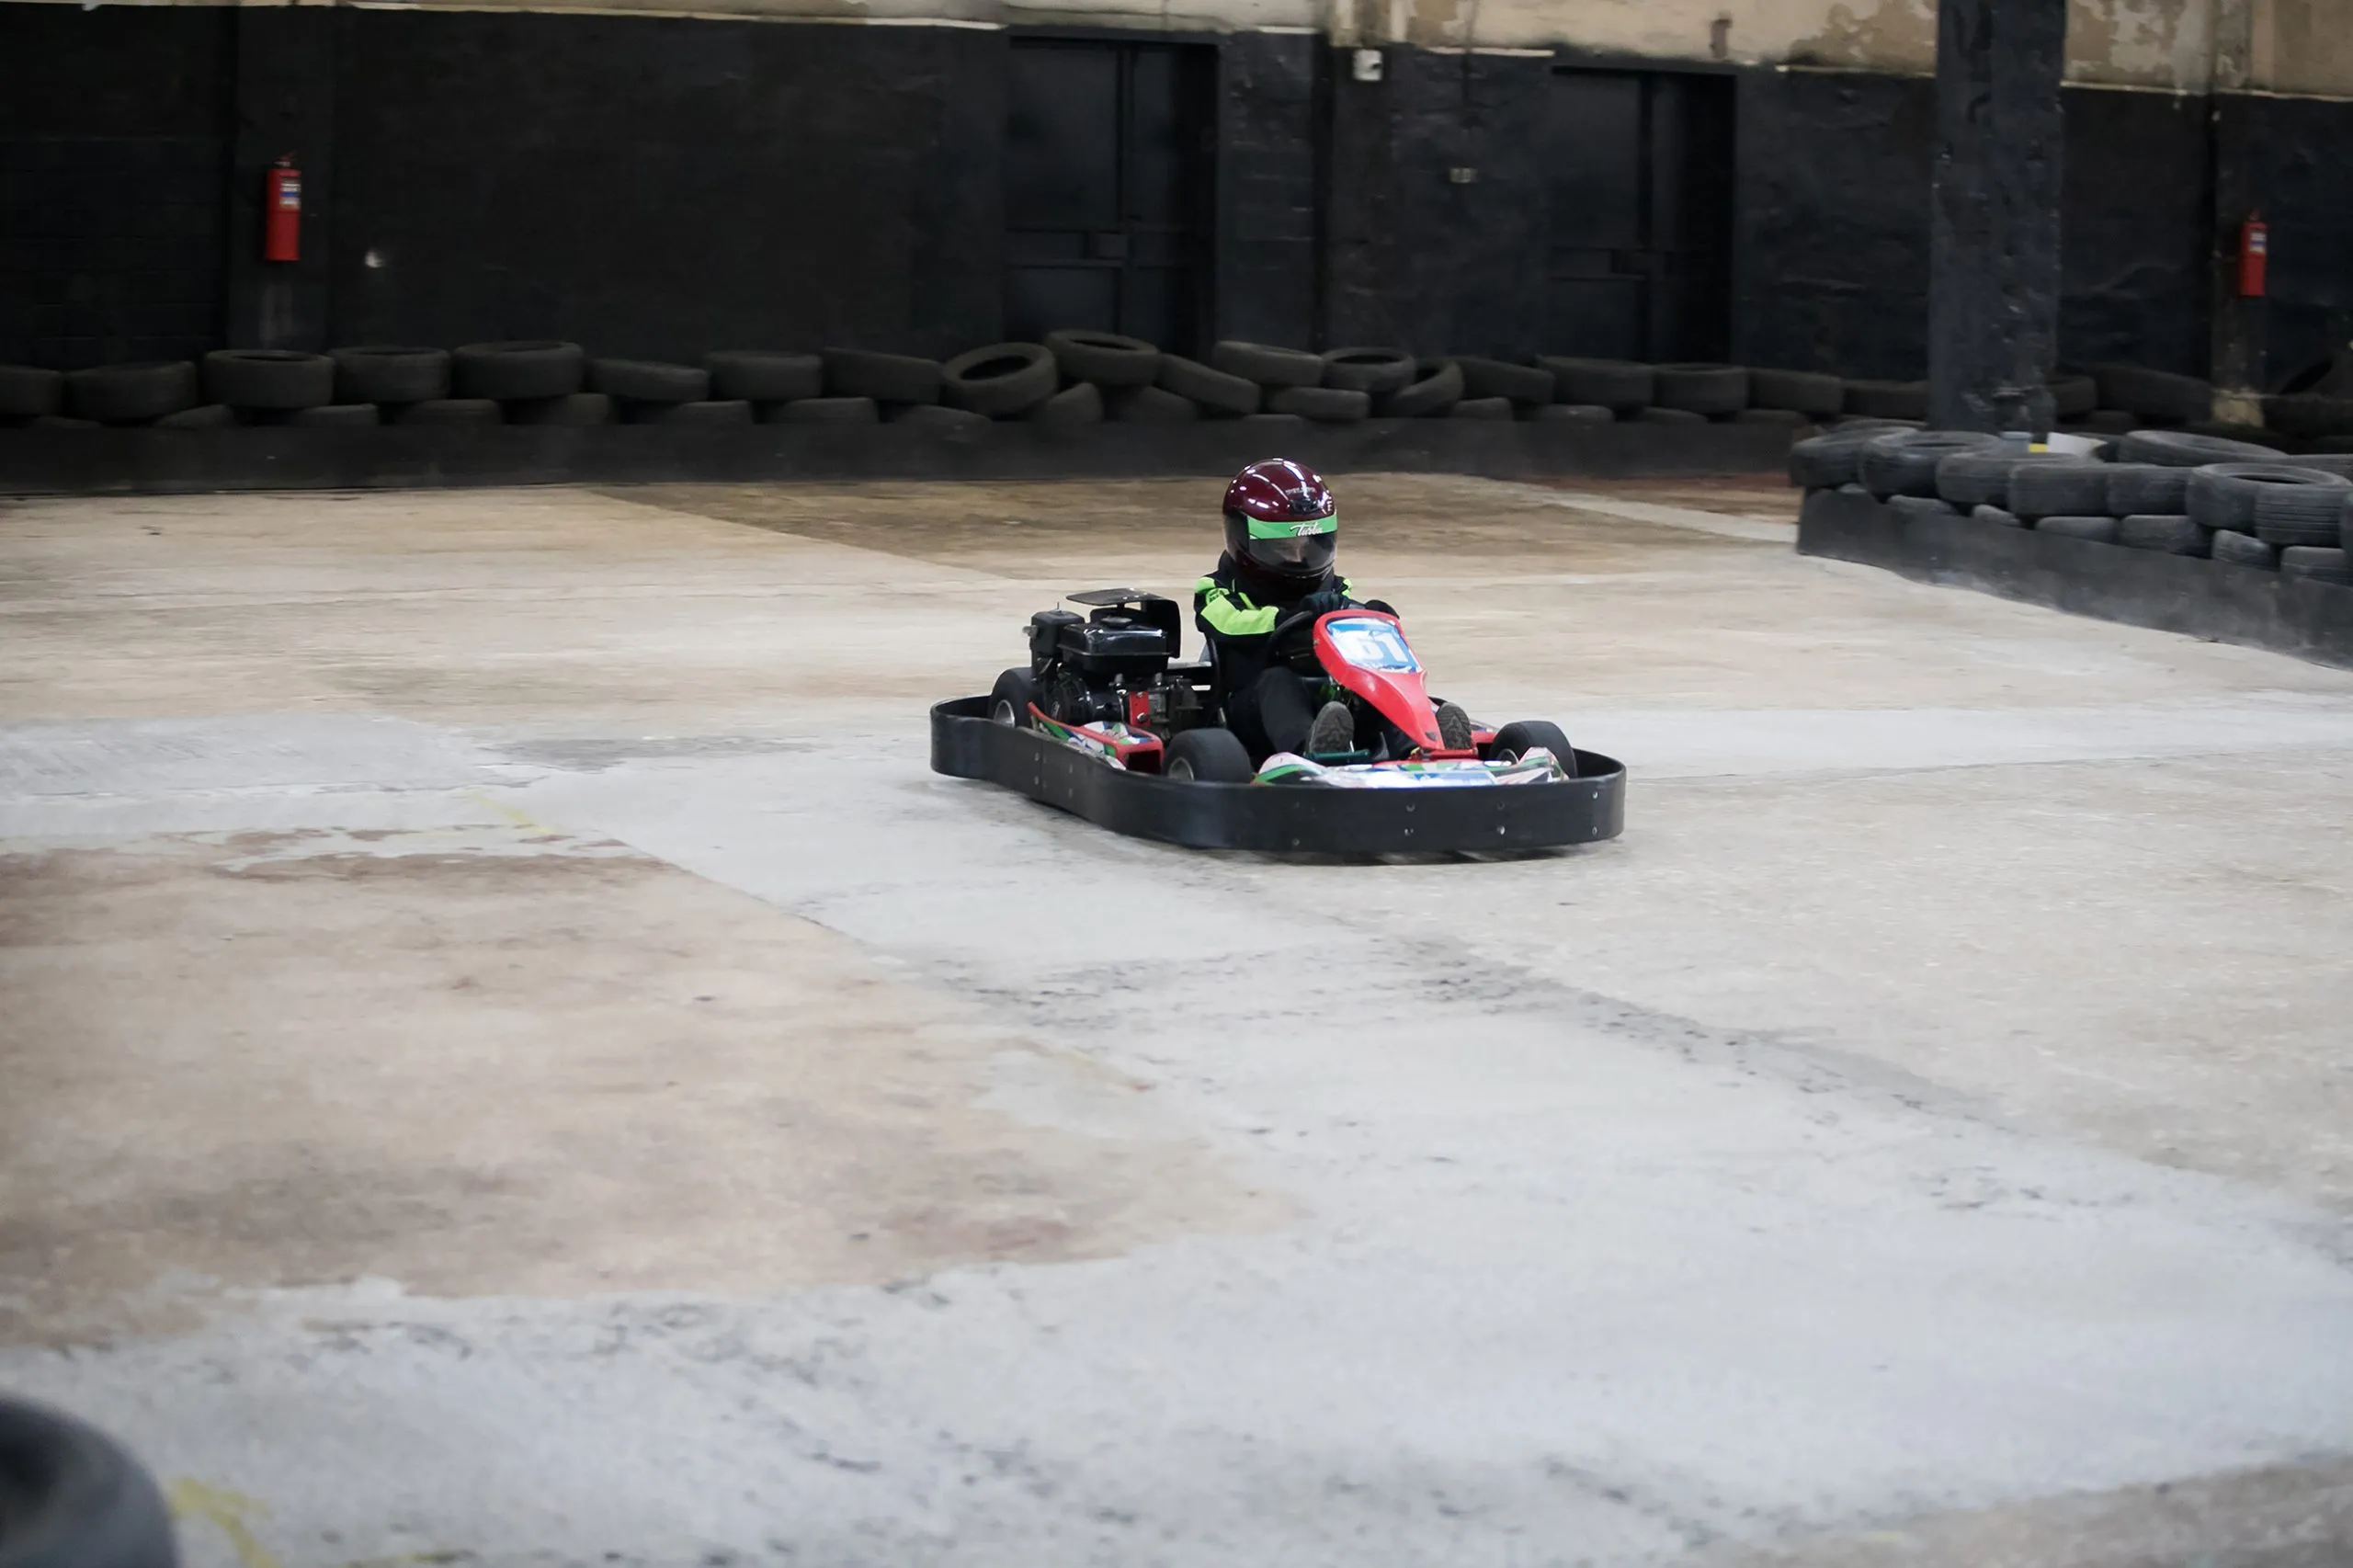 Karting Championship. Driver in karts wearing helmet, racing suit participate in kart race. Karting show. Children, adult racers karting.